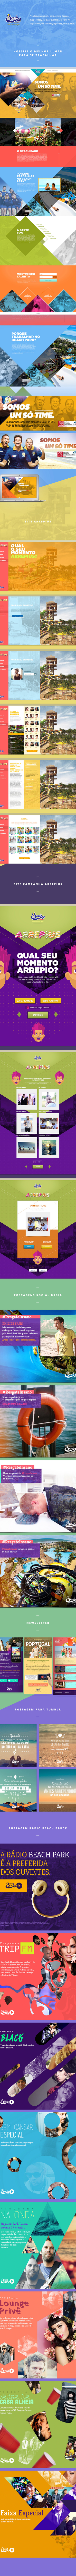 Web site Website graphicdesign socialmidia